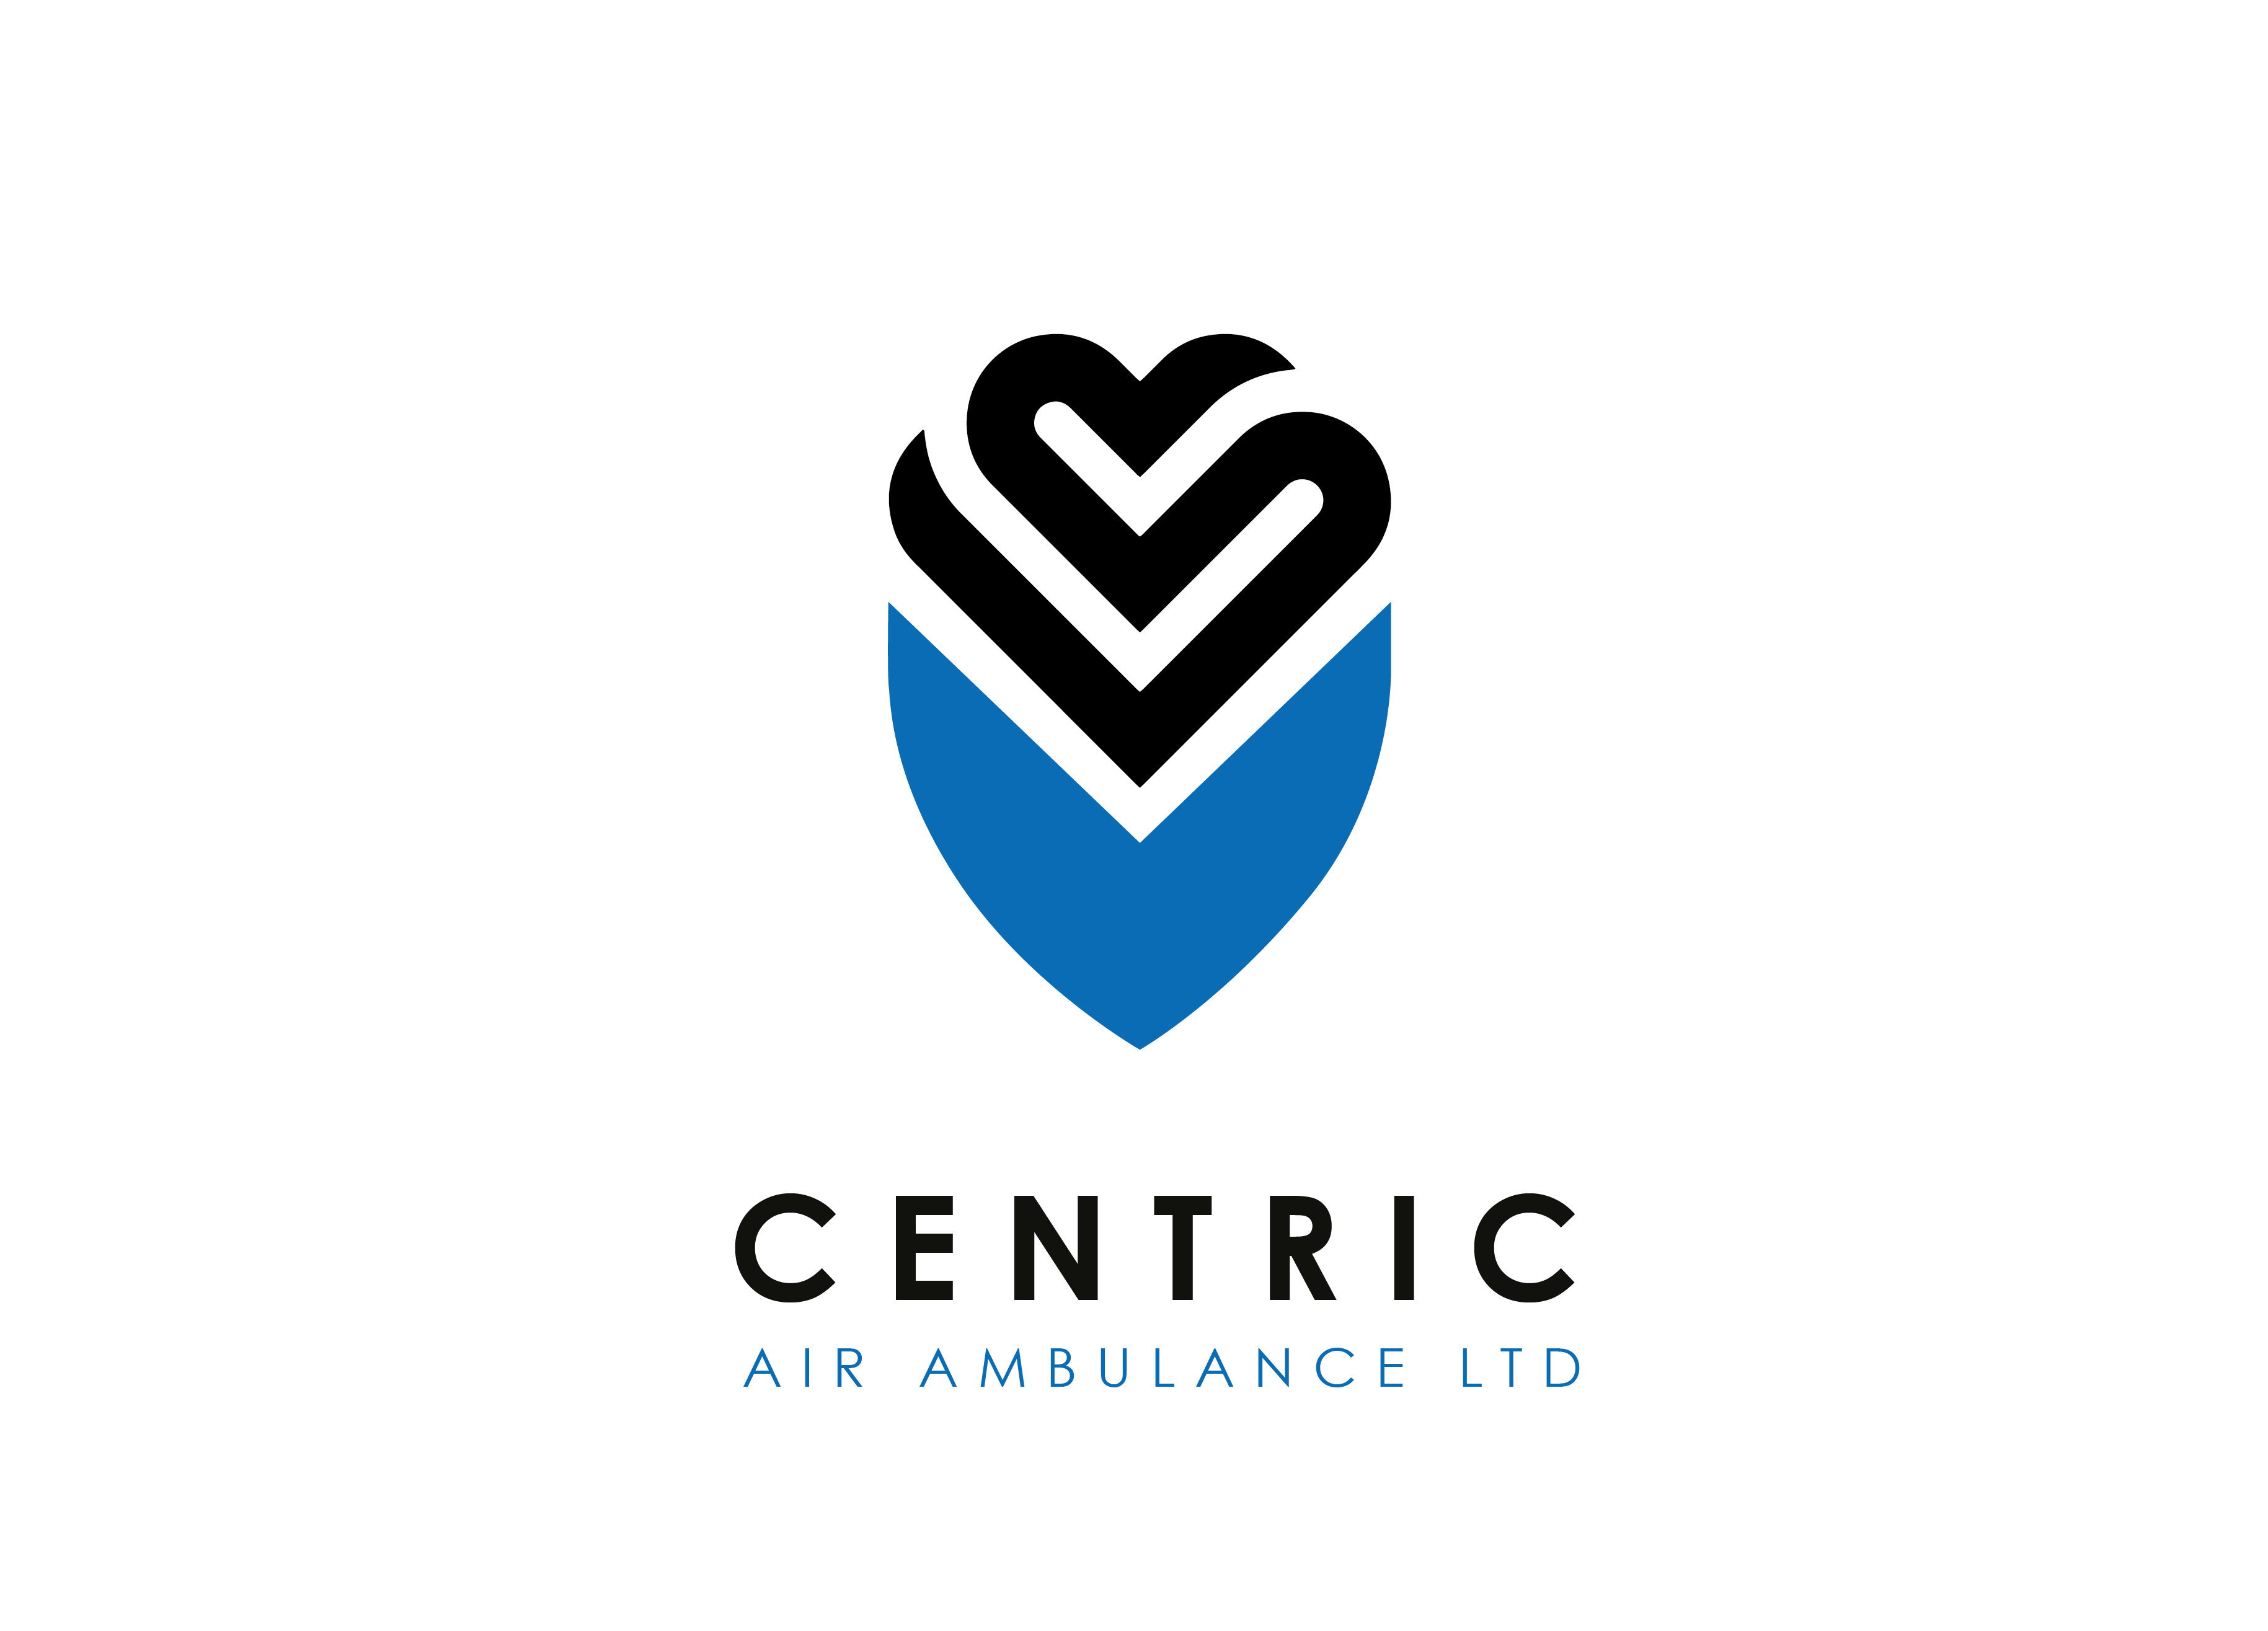 CAA provides emergency medical evacuation through air ambulance, ground ambulance, medical escort, hospital transfers, non-emergency escort.